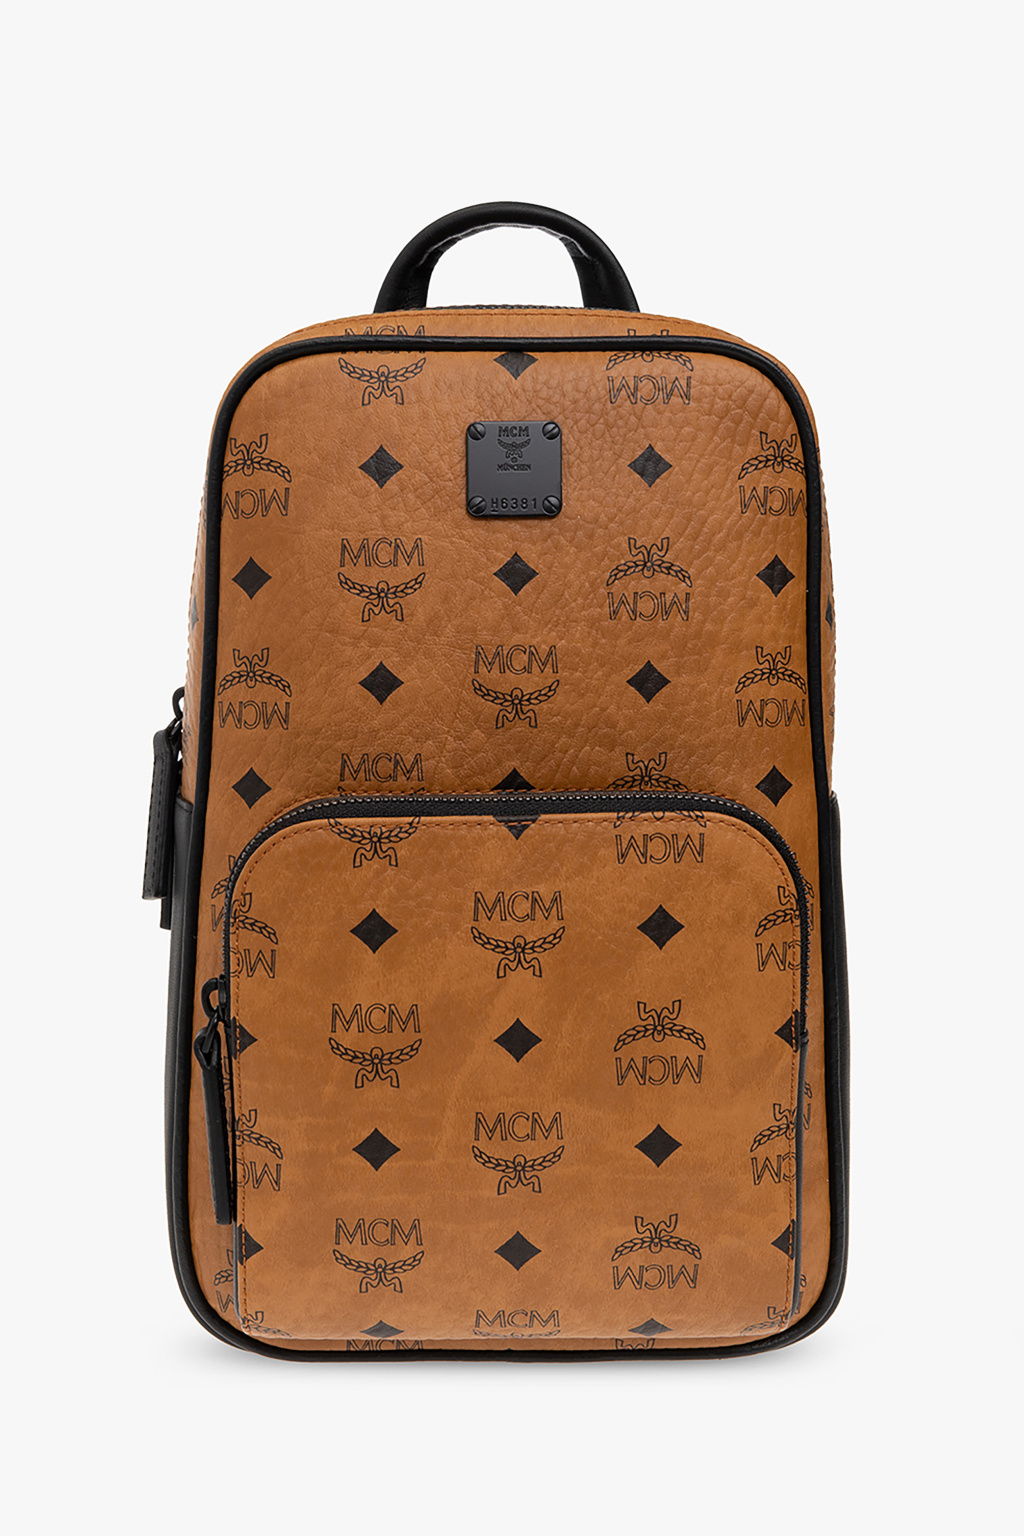 MCM - MCM Bag on Designer Wardrobe